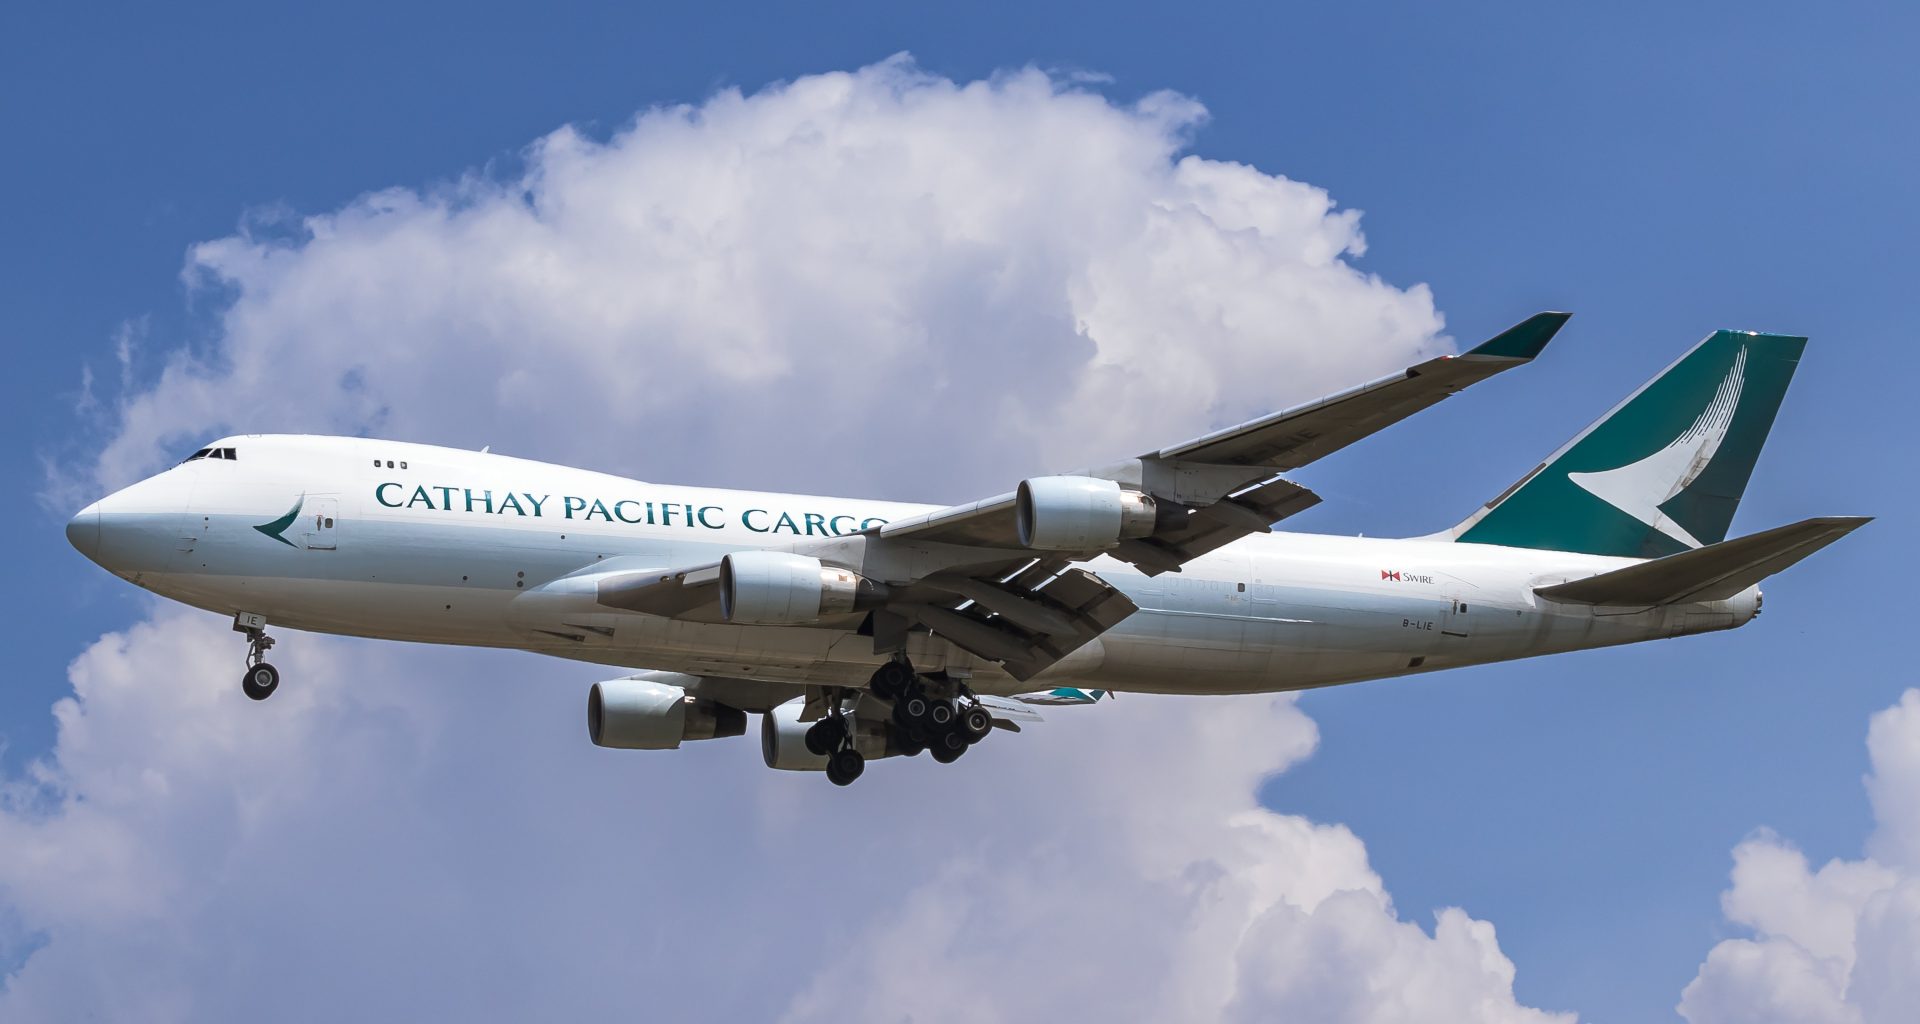 Hong Kong’s Cathay Pacific airlines